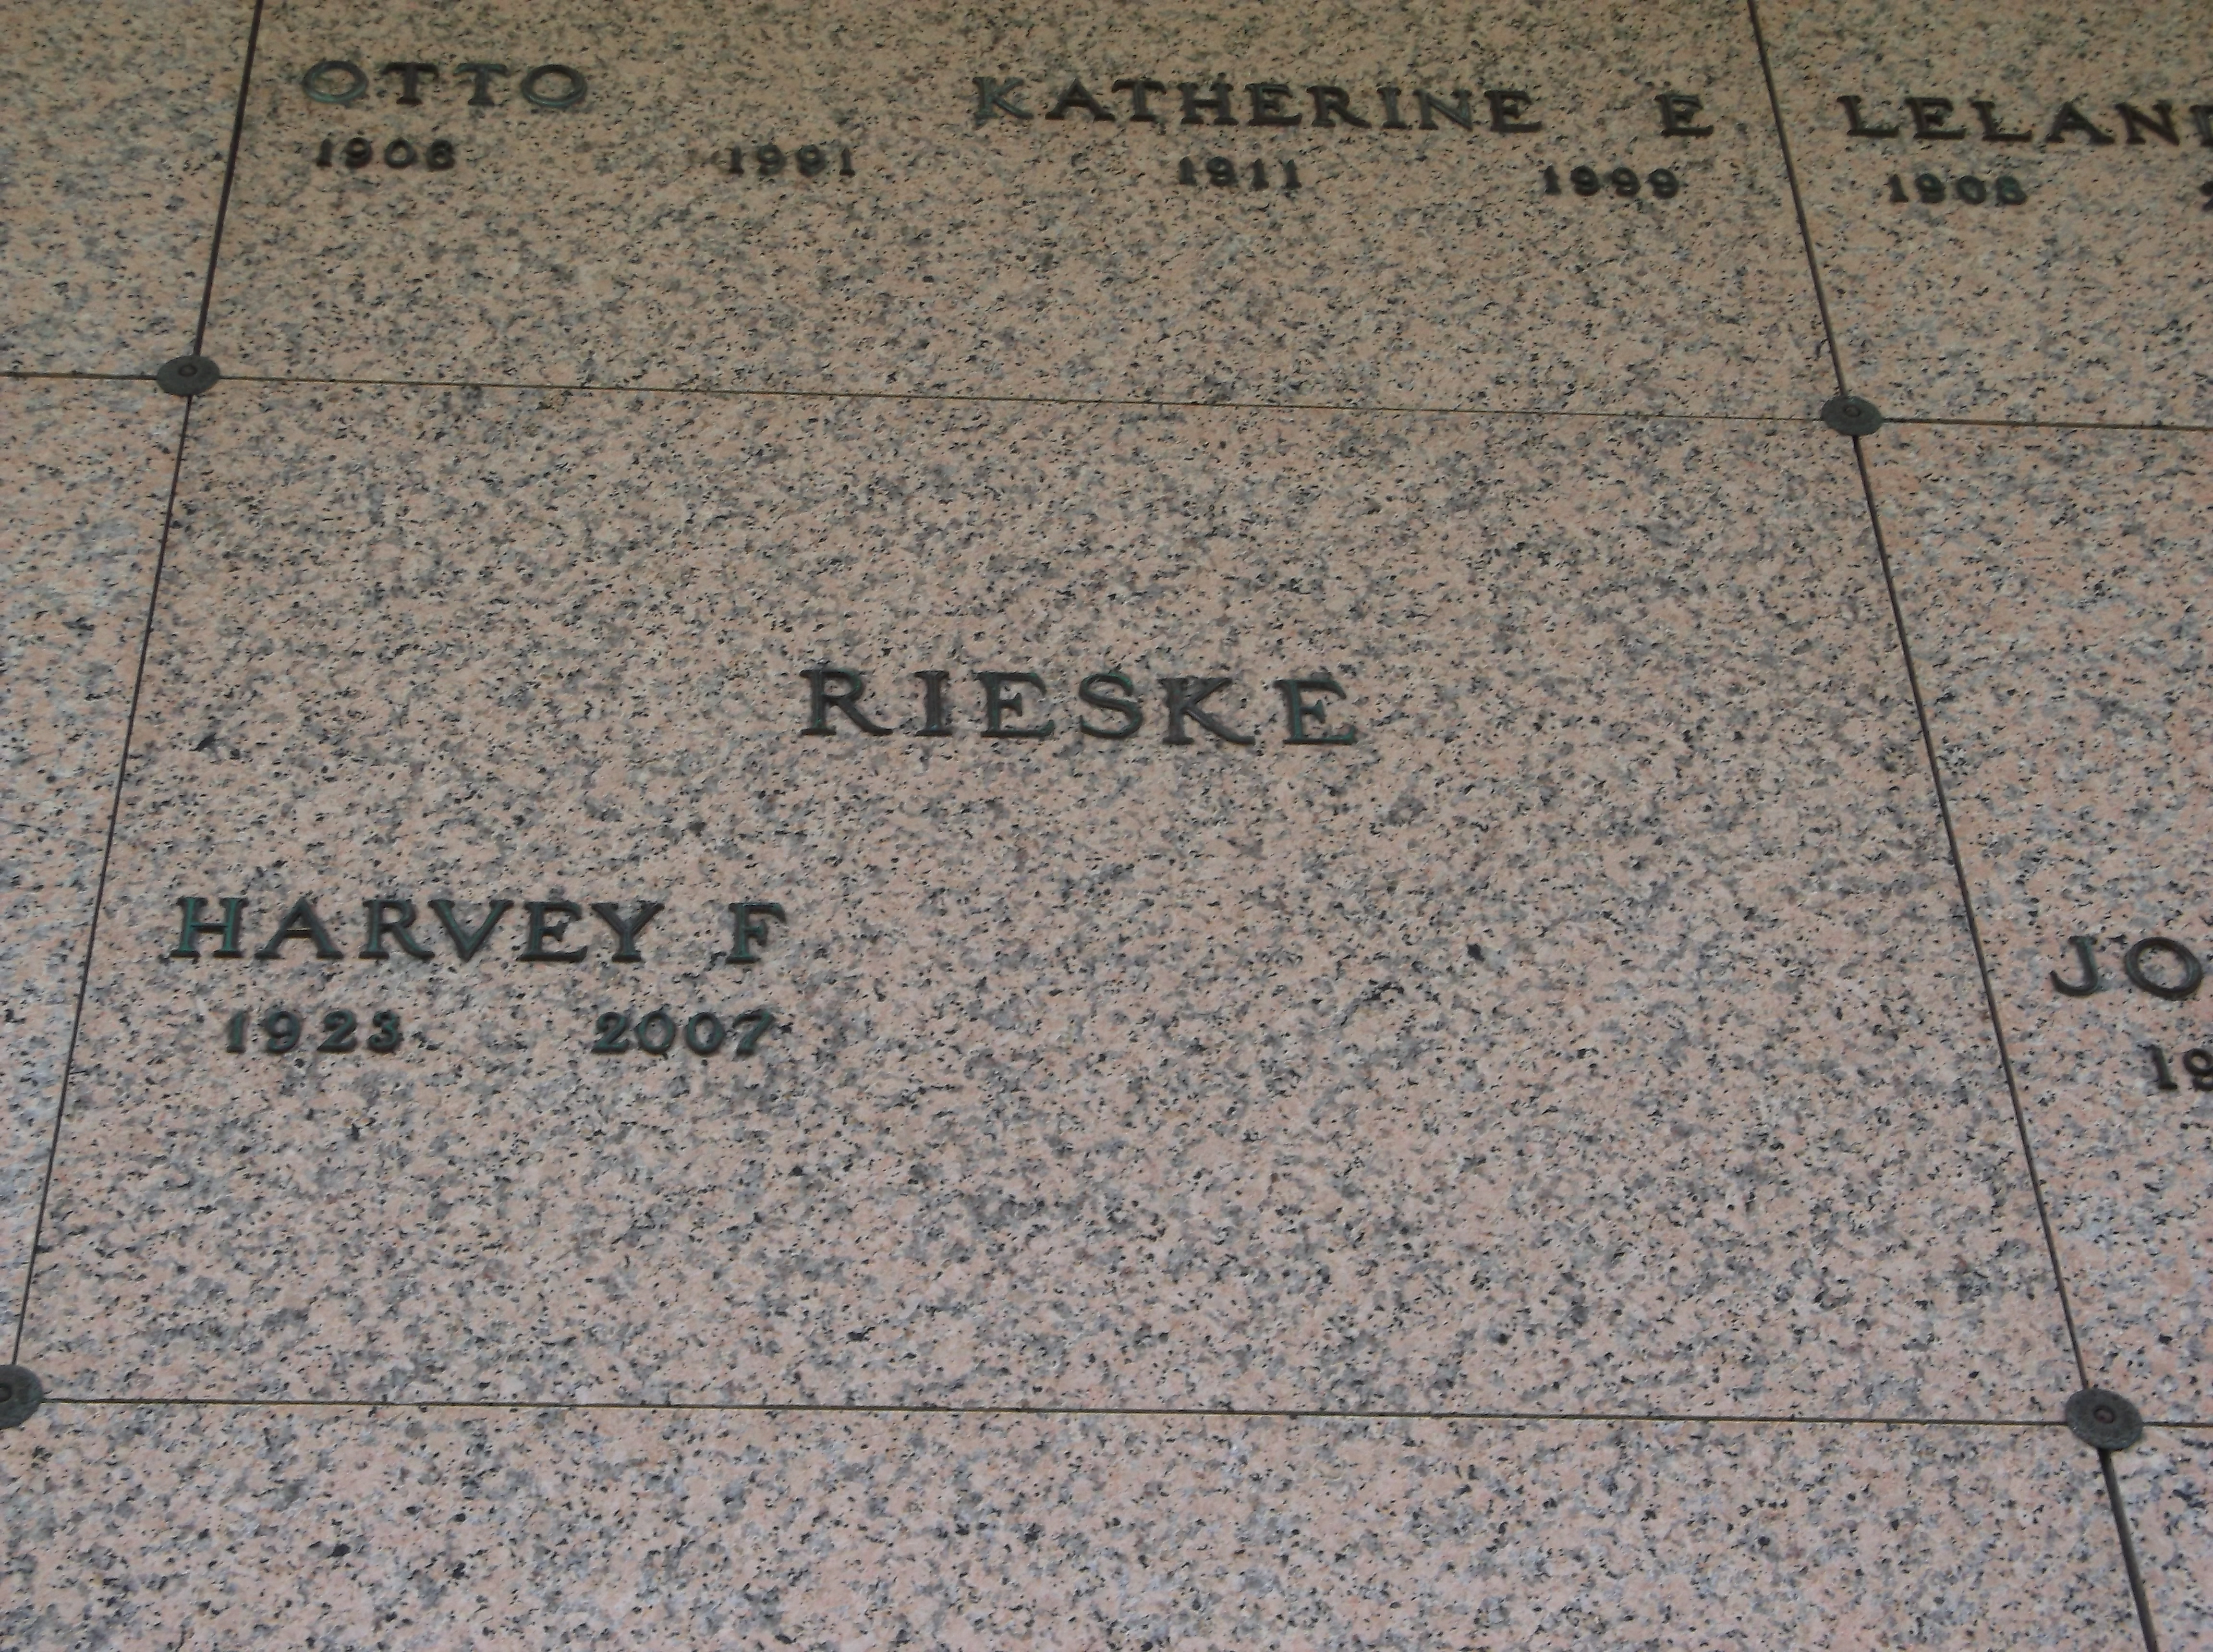 Harvey F Rieske